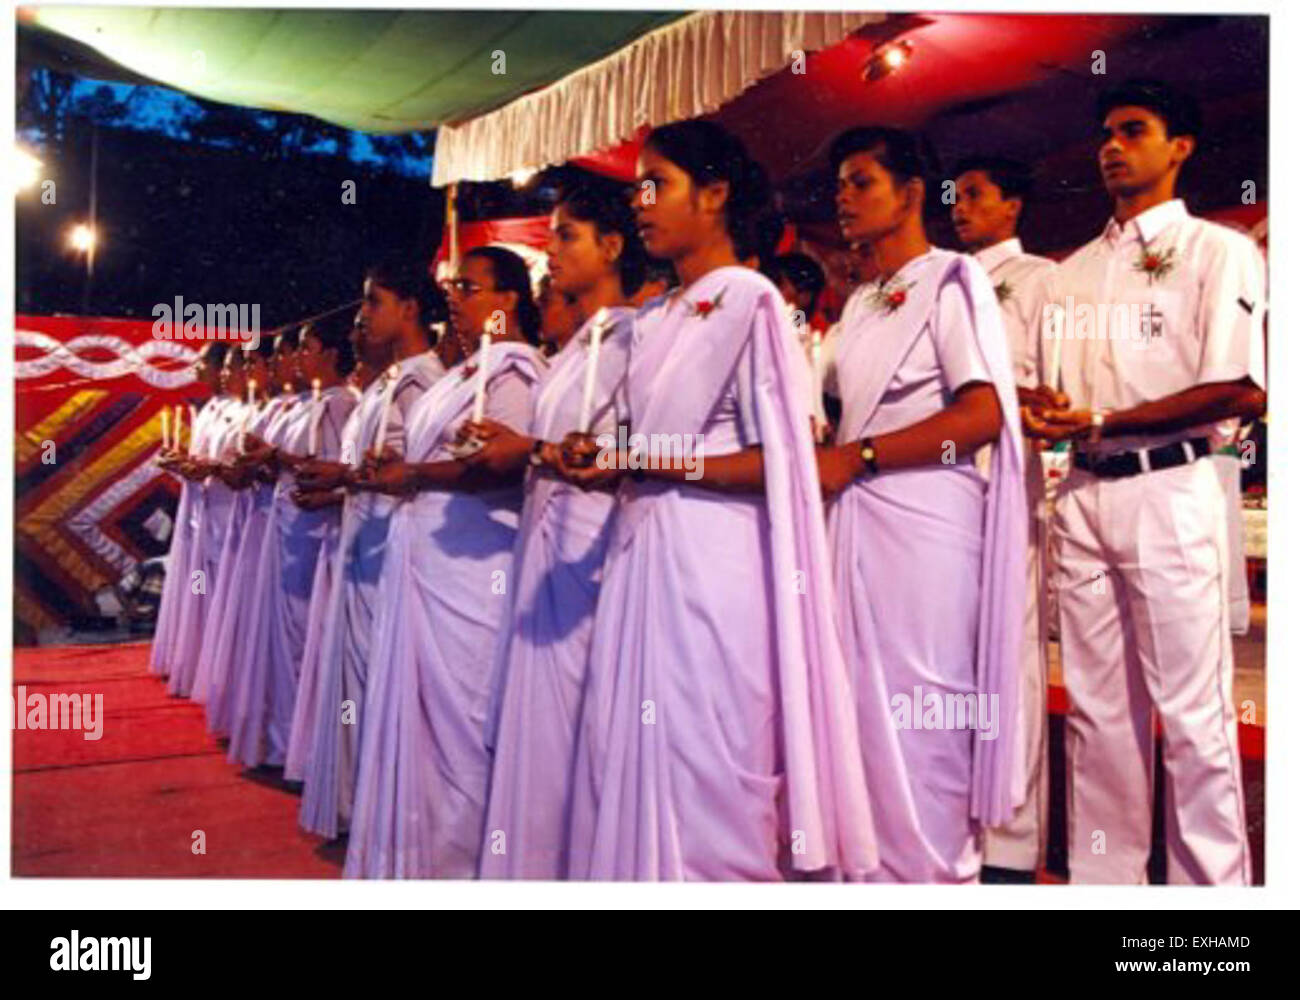 Dhamtari Nursing Students Stock Photo